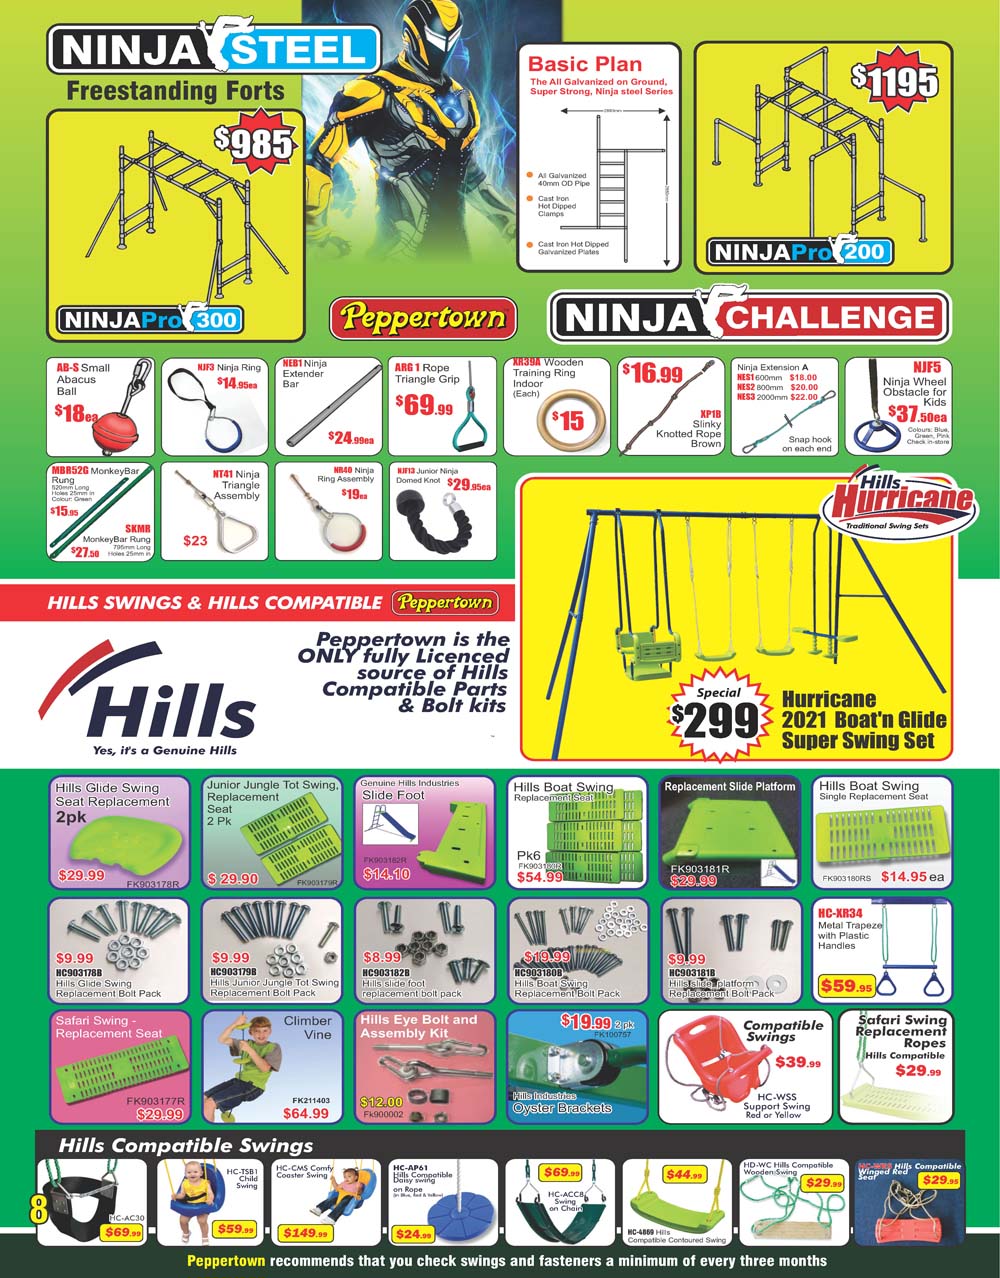 Hills Swings & Hills Compatible